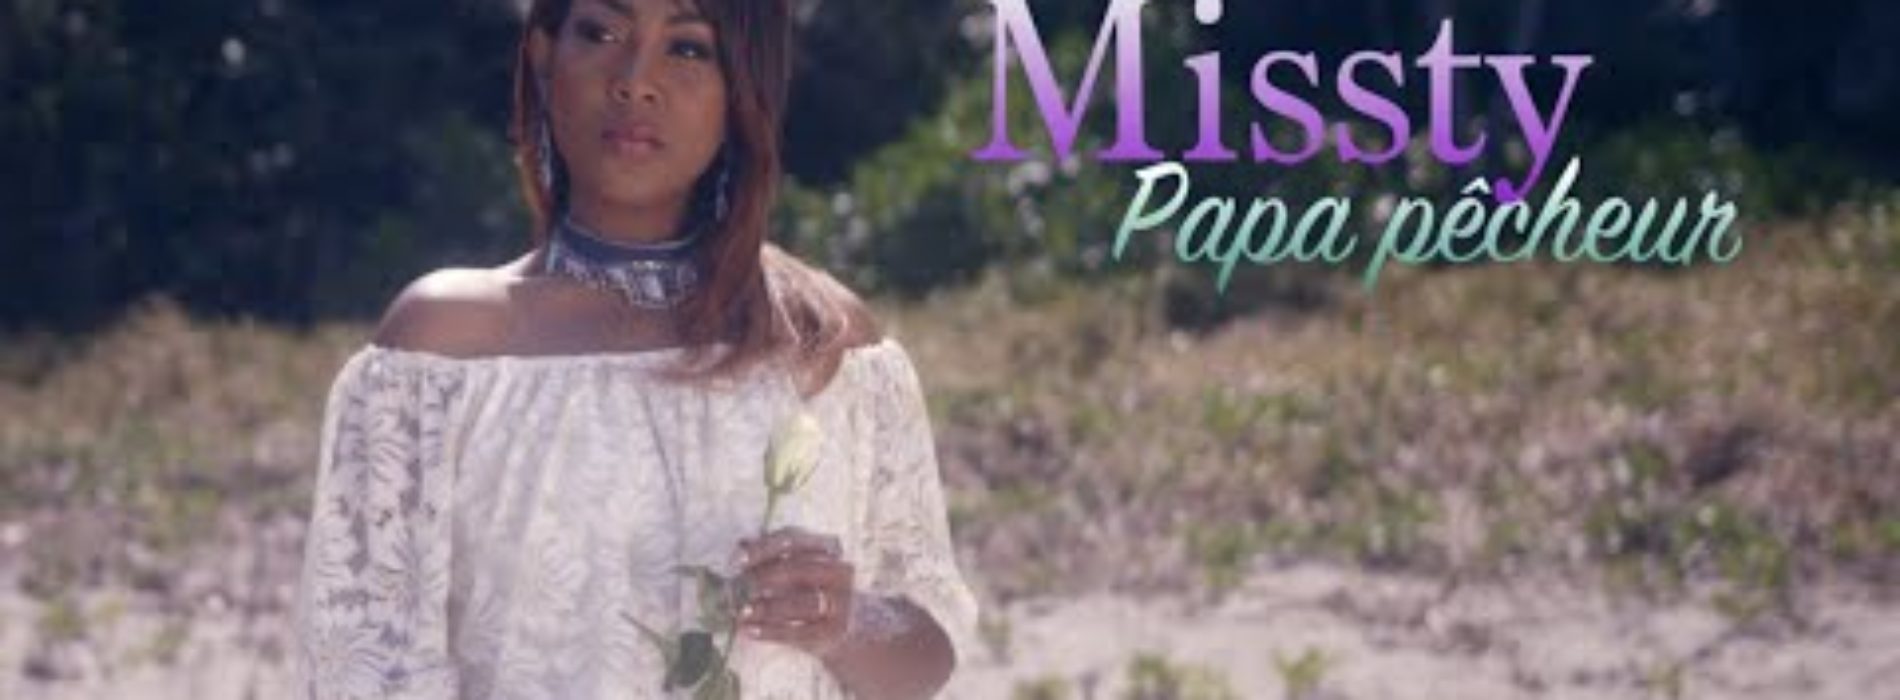 SÉGA – Missty – Papa pêcheur – clip officiel – Août 2020